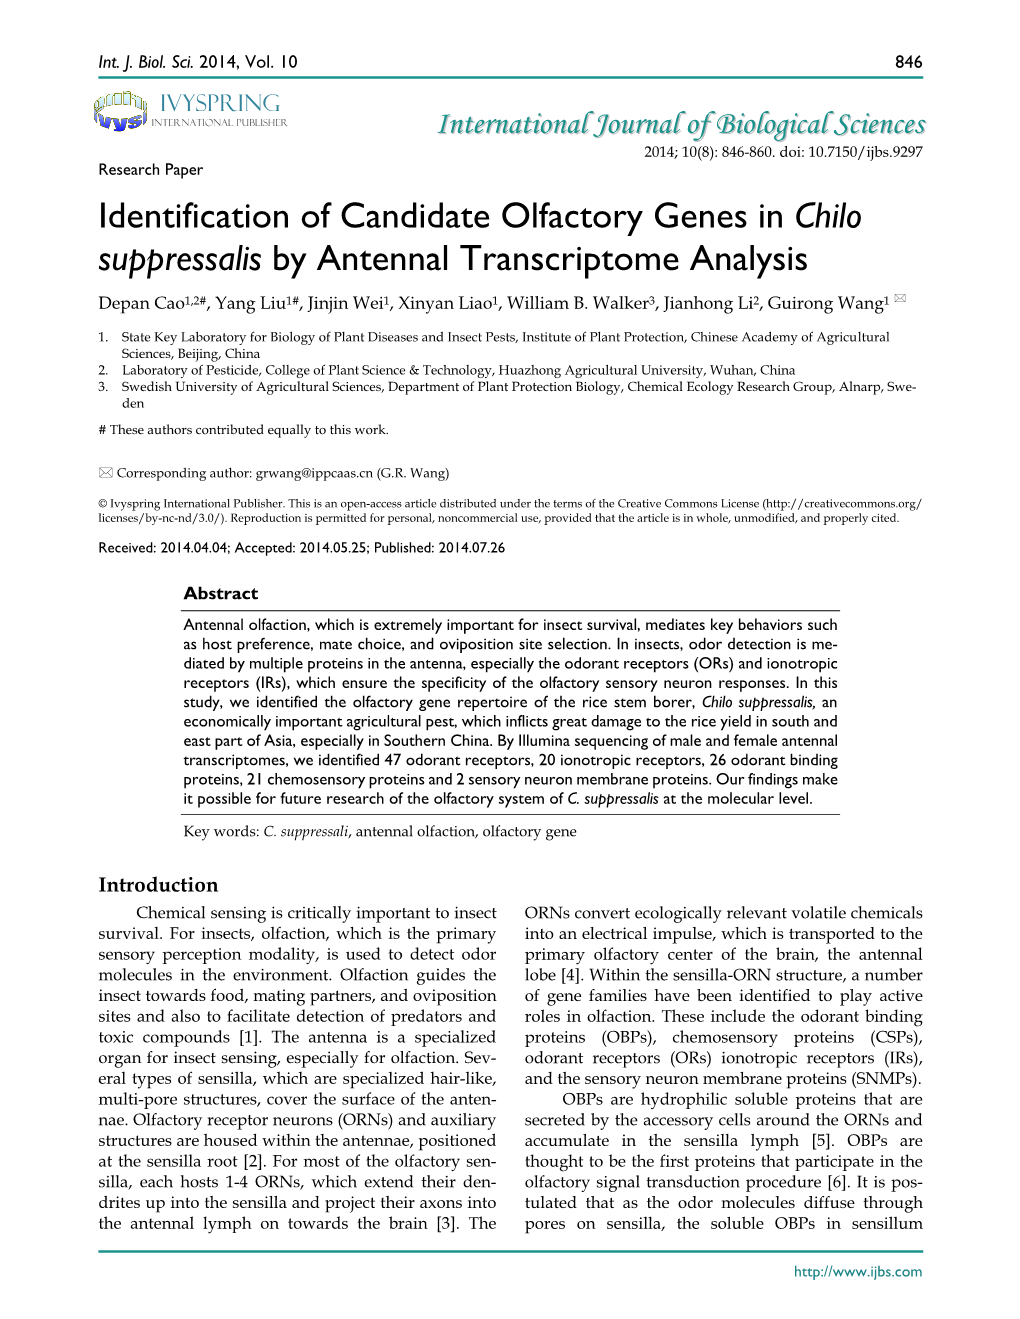 Identification of Candidate Olfactory Genes in Chilo Suppressalis by Antennal Transcriptome Analysis Depan Cao1,2#, Yang Liu1#, Jinjin Wei1, Xinyan Liao1, William B